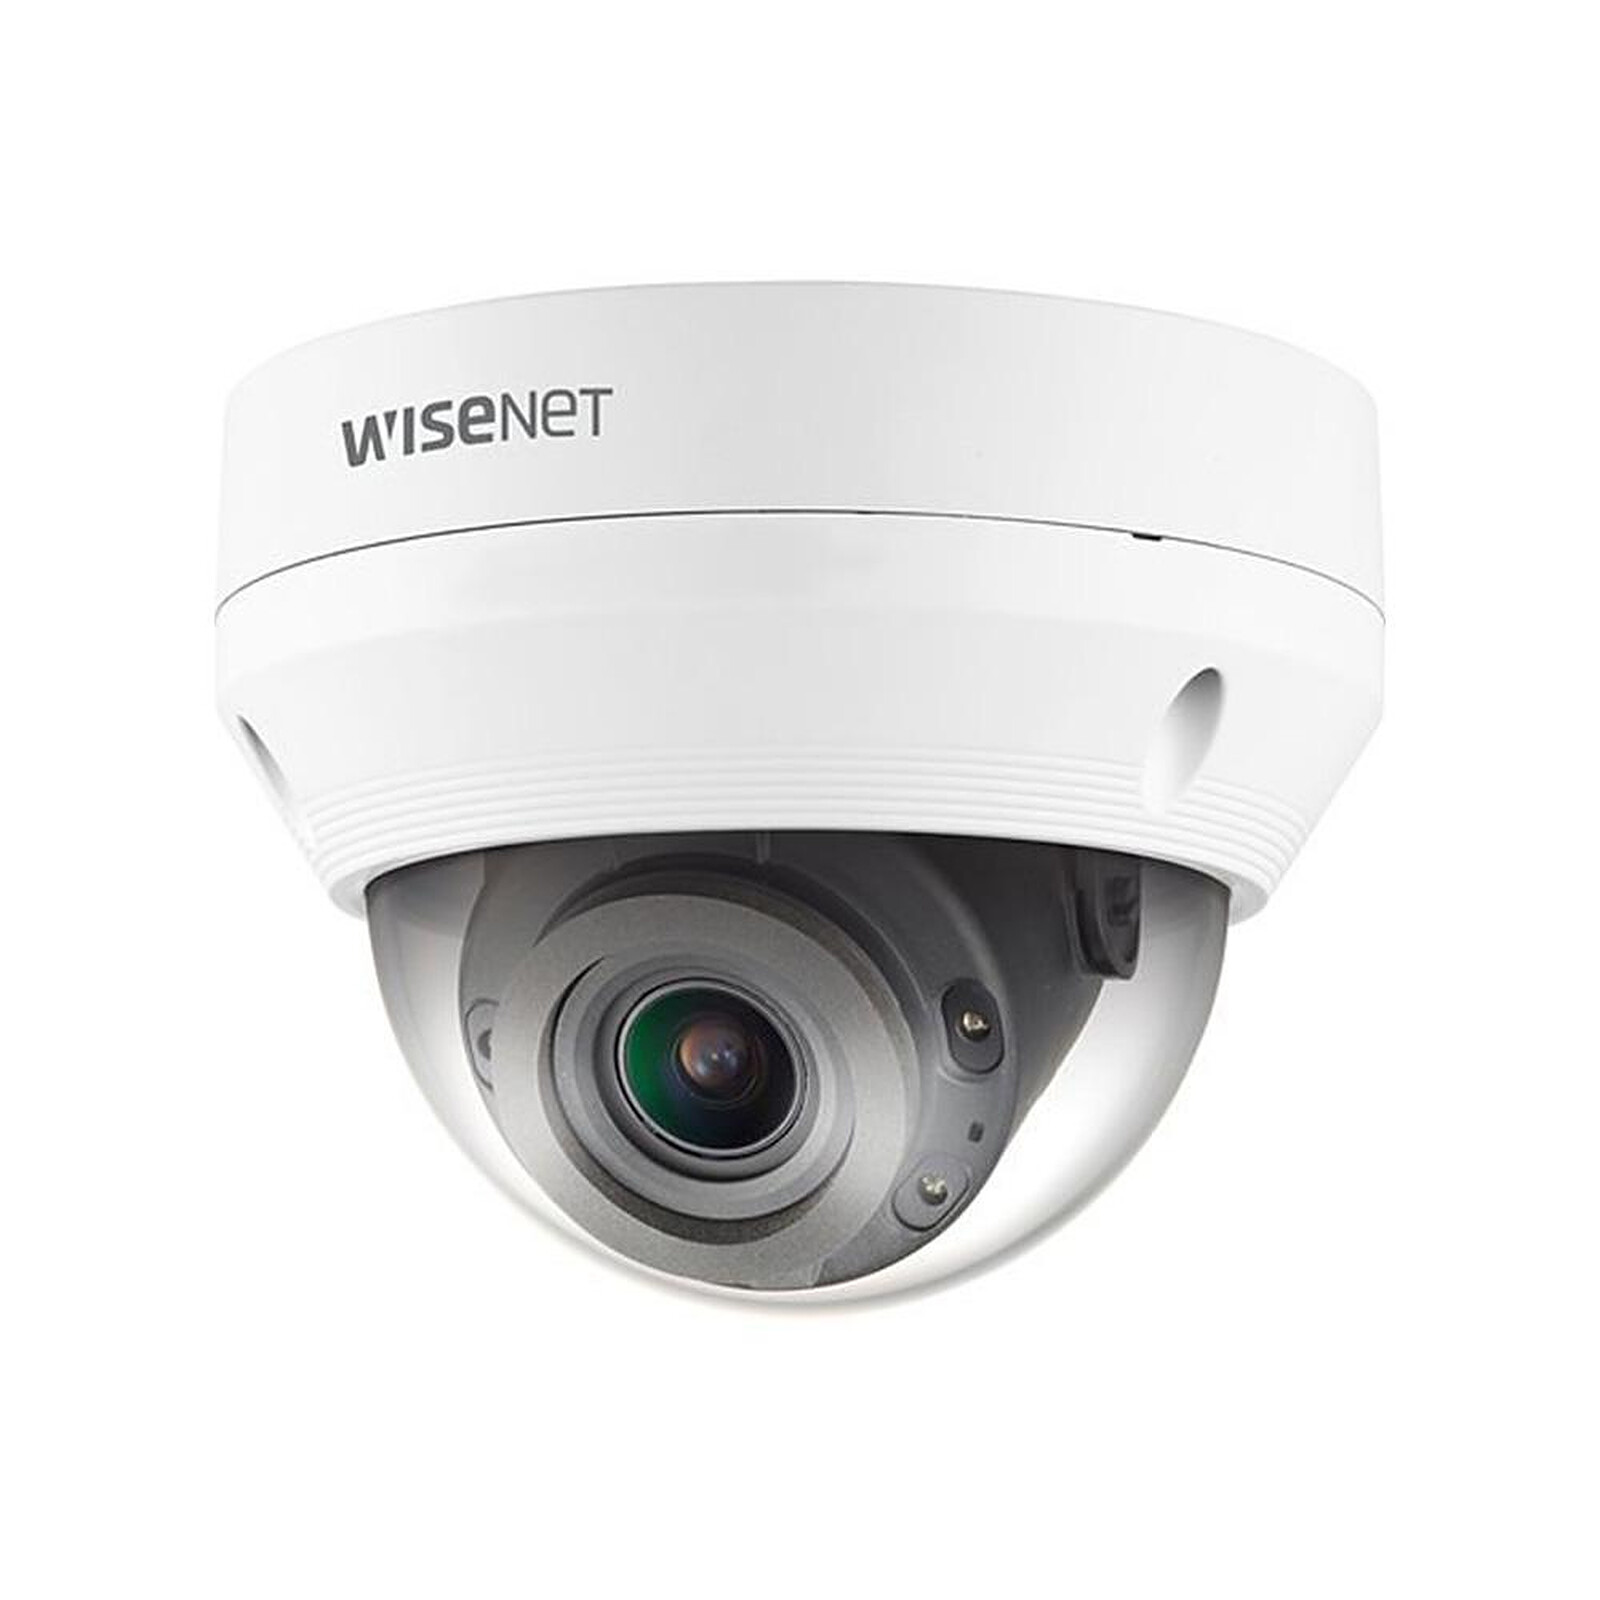 Hanwha - Caméra de surveillance Dôme réseau IR varifocal anti